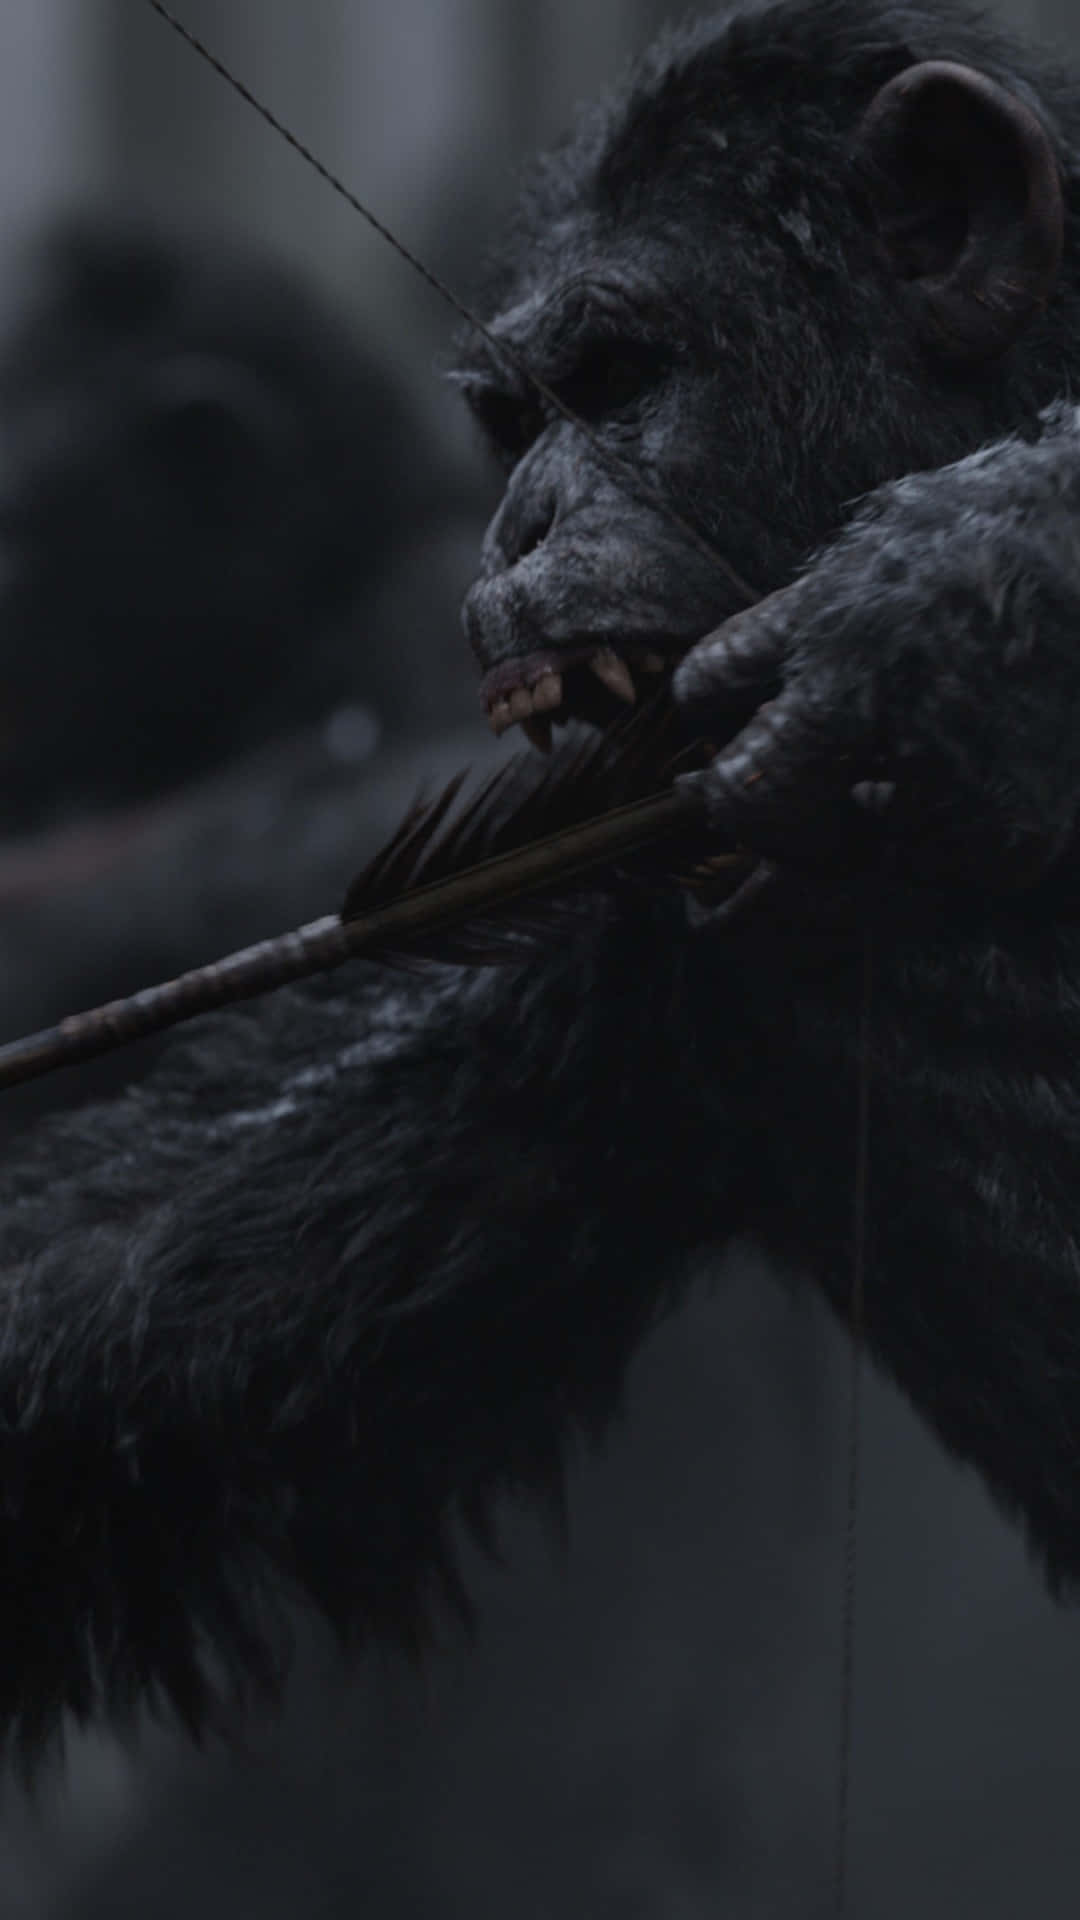 Pixel 3 Gorilla With Arrow Weapon Background